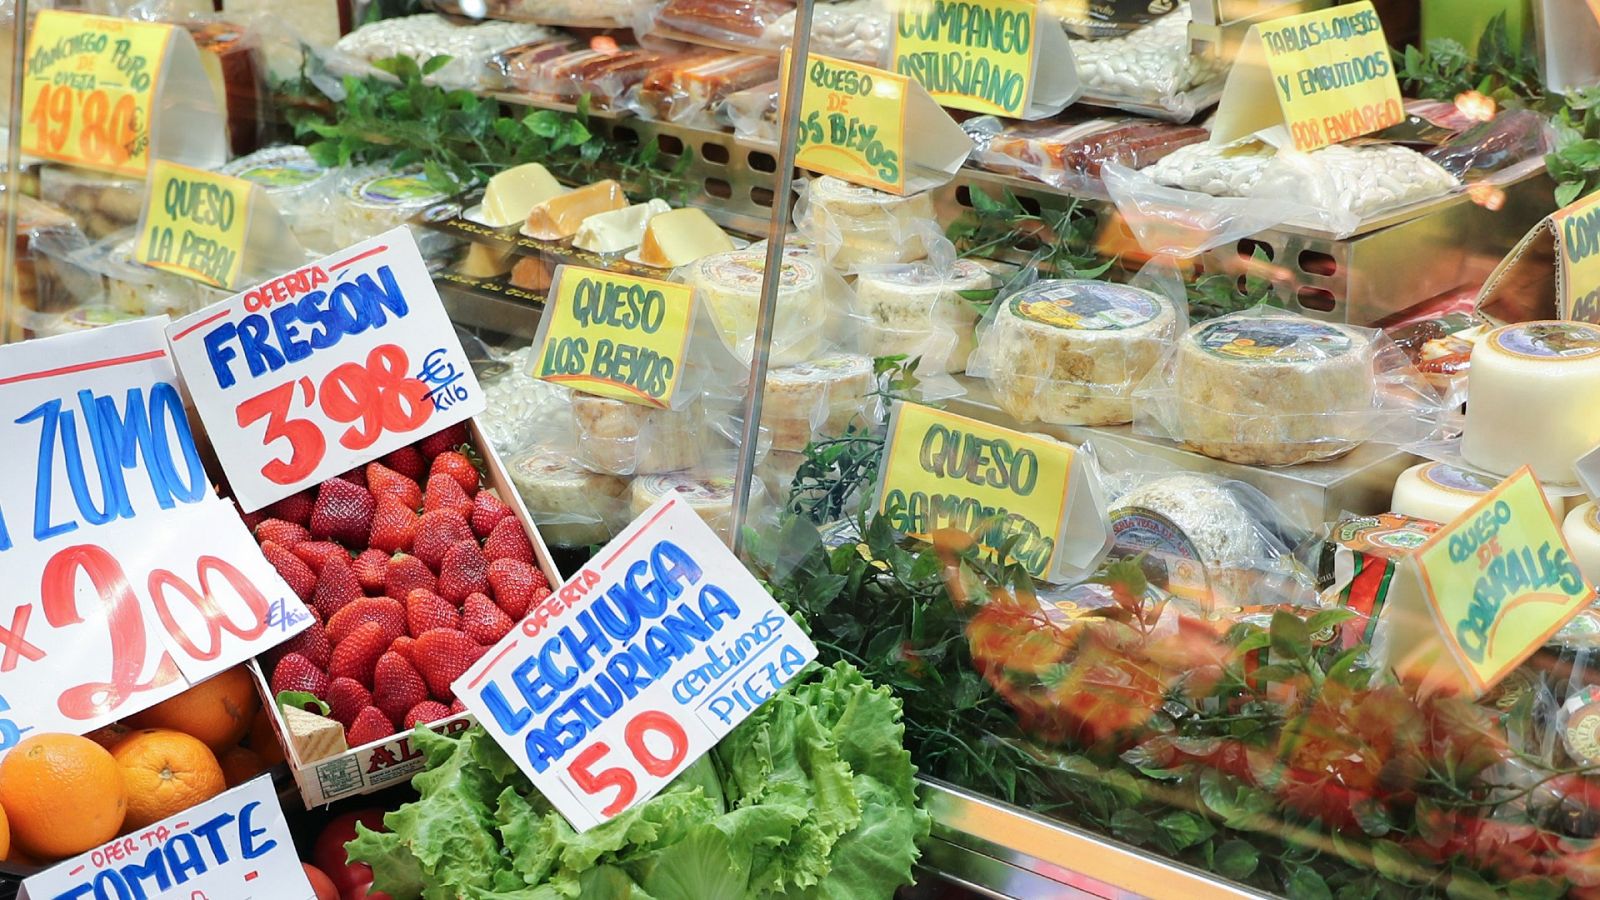 Expositor de un supermercado en Oviedo